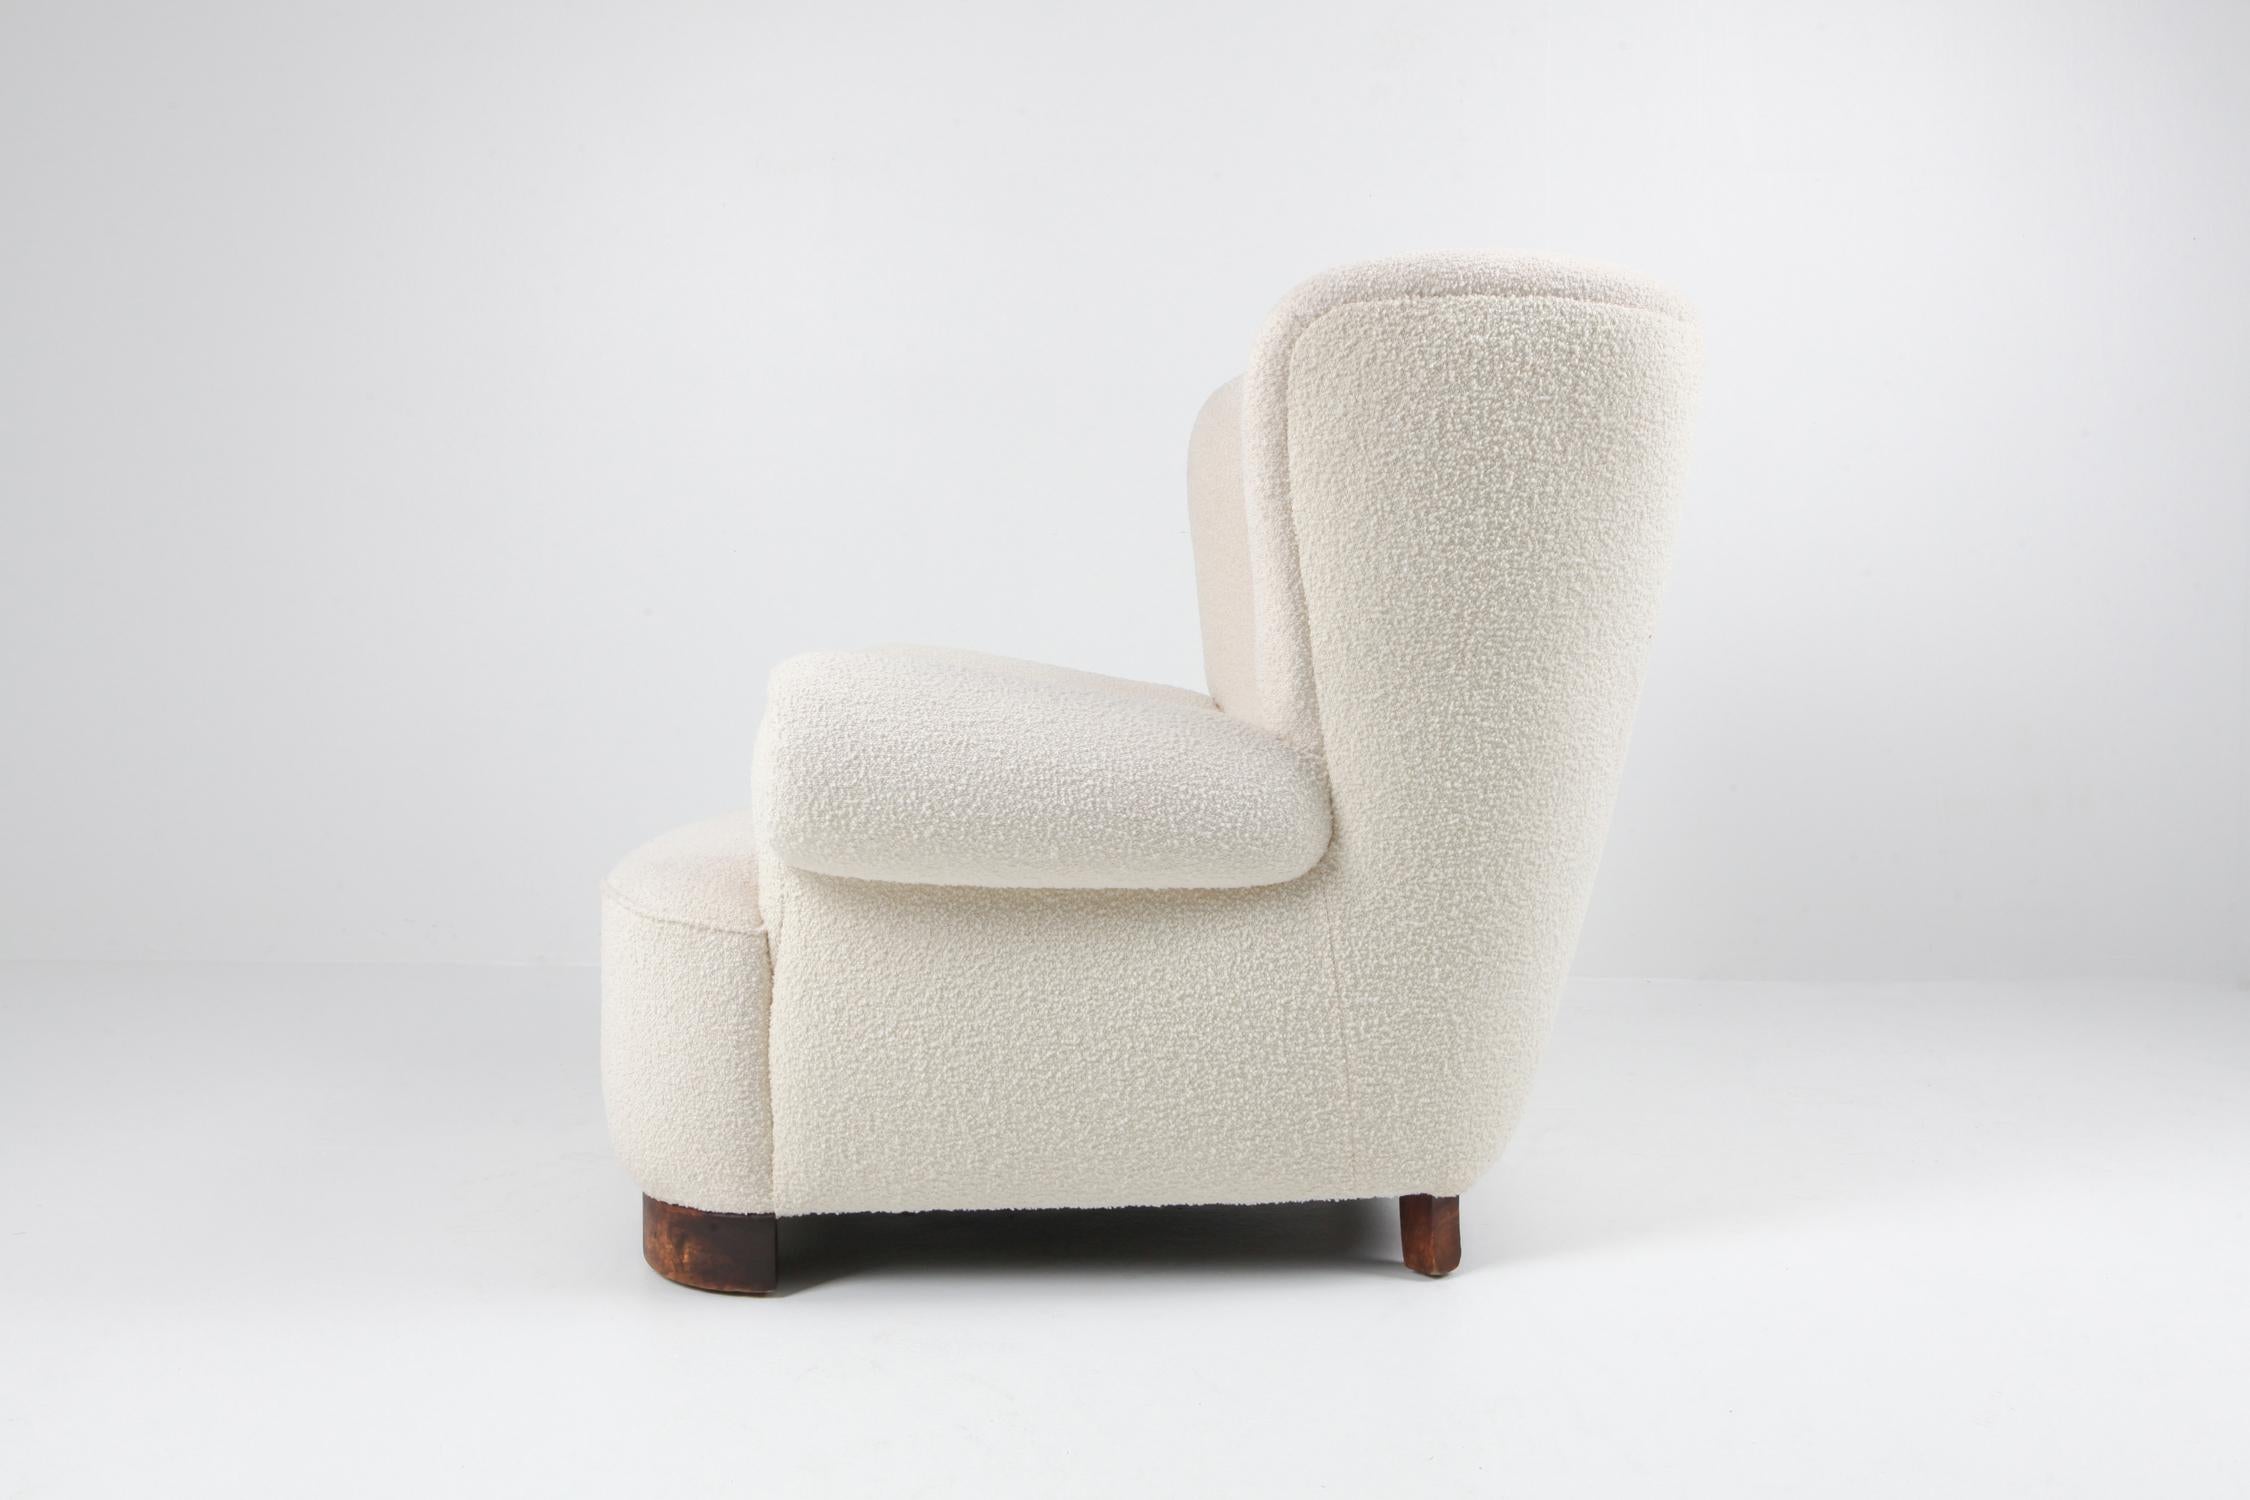 Flemming Lassen Style Sessel aus Bouclé-Wolle, skandinavisches Design, 1960er Jahre (Dänisch) im Angebot